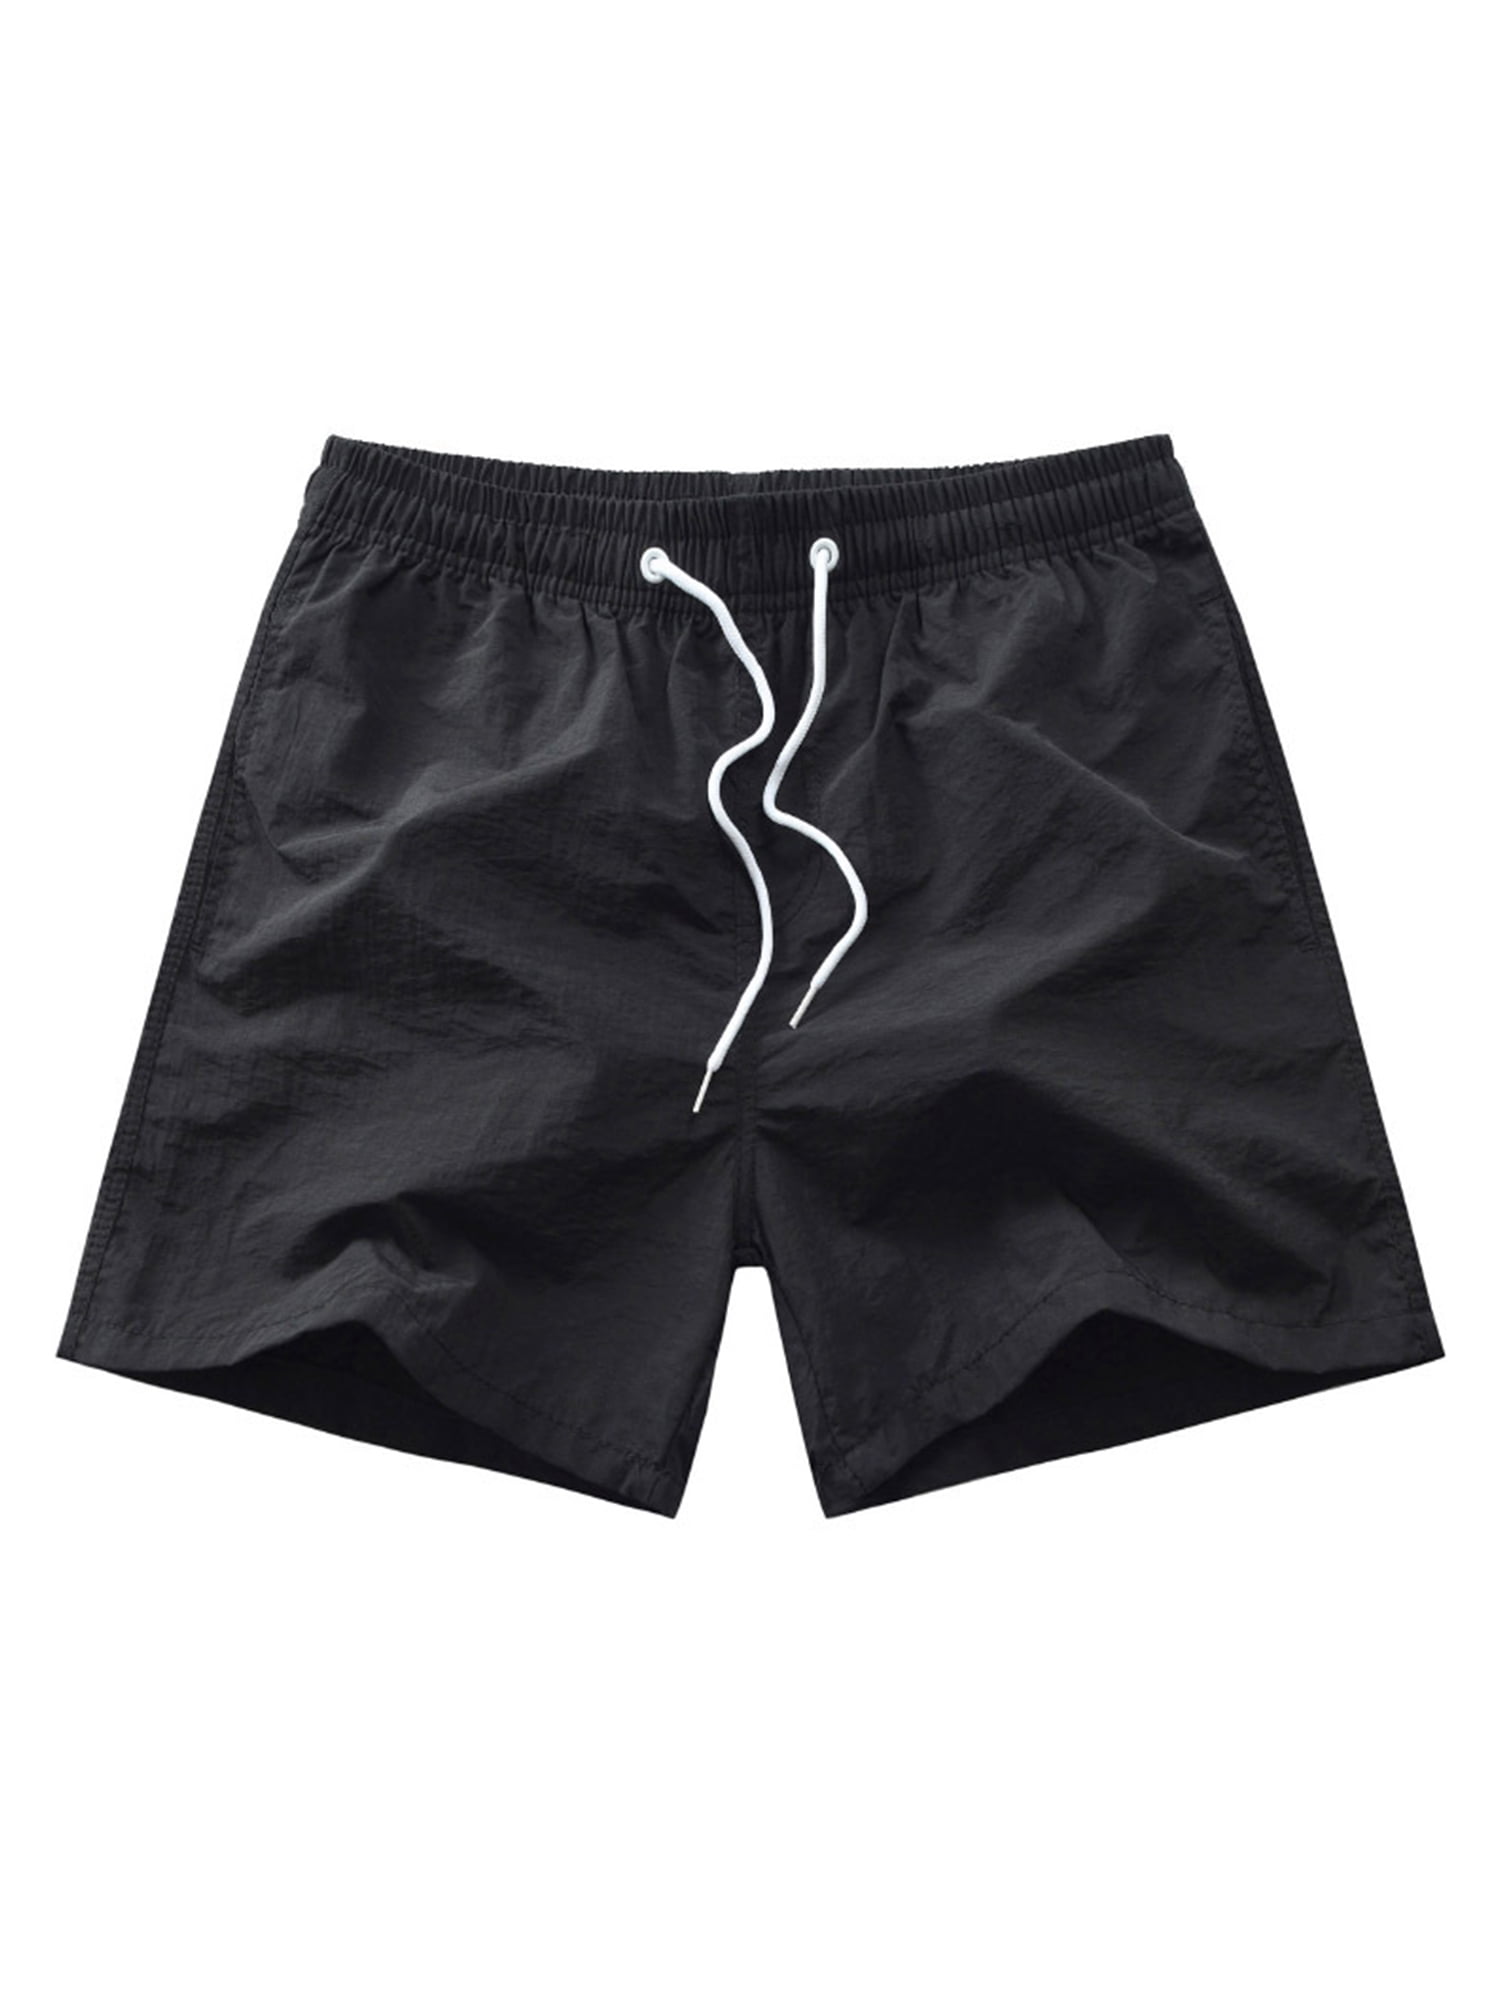 MAWCLOS Summer Casual Loose Shorts Men Athletic Gym Running Activewear ...